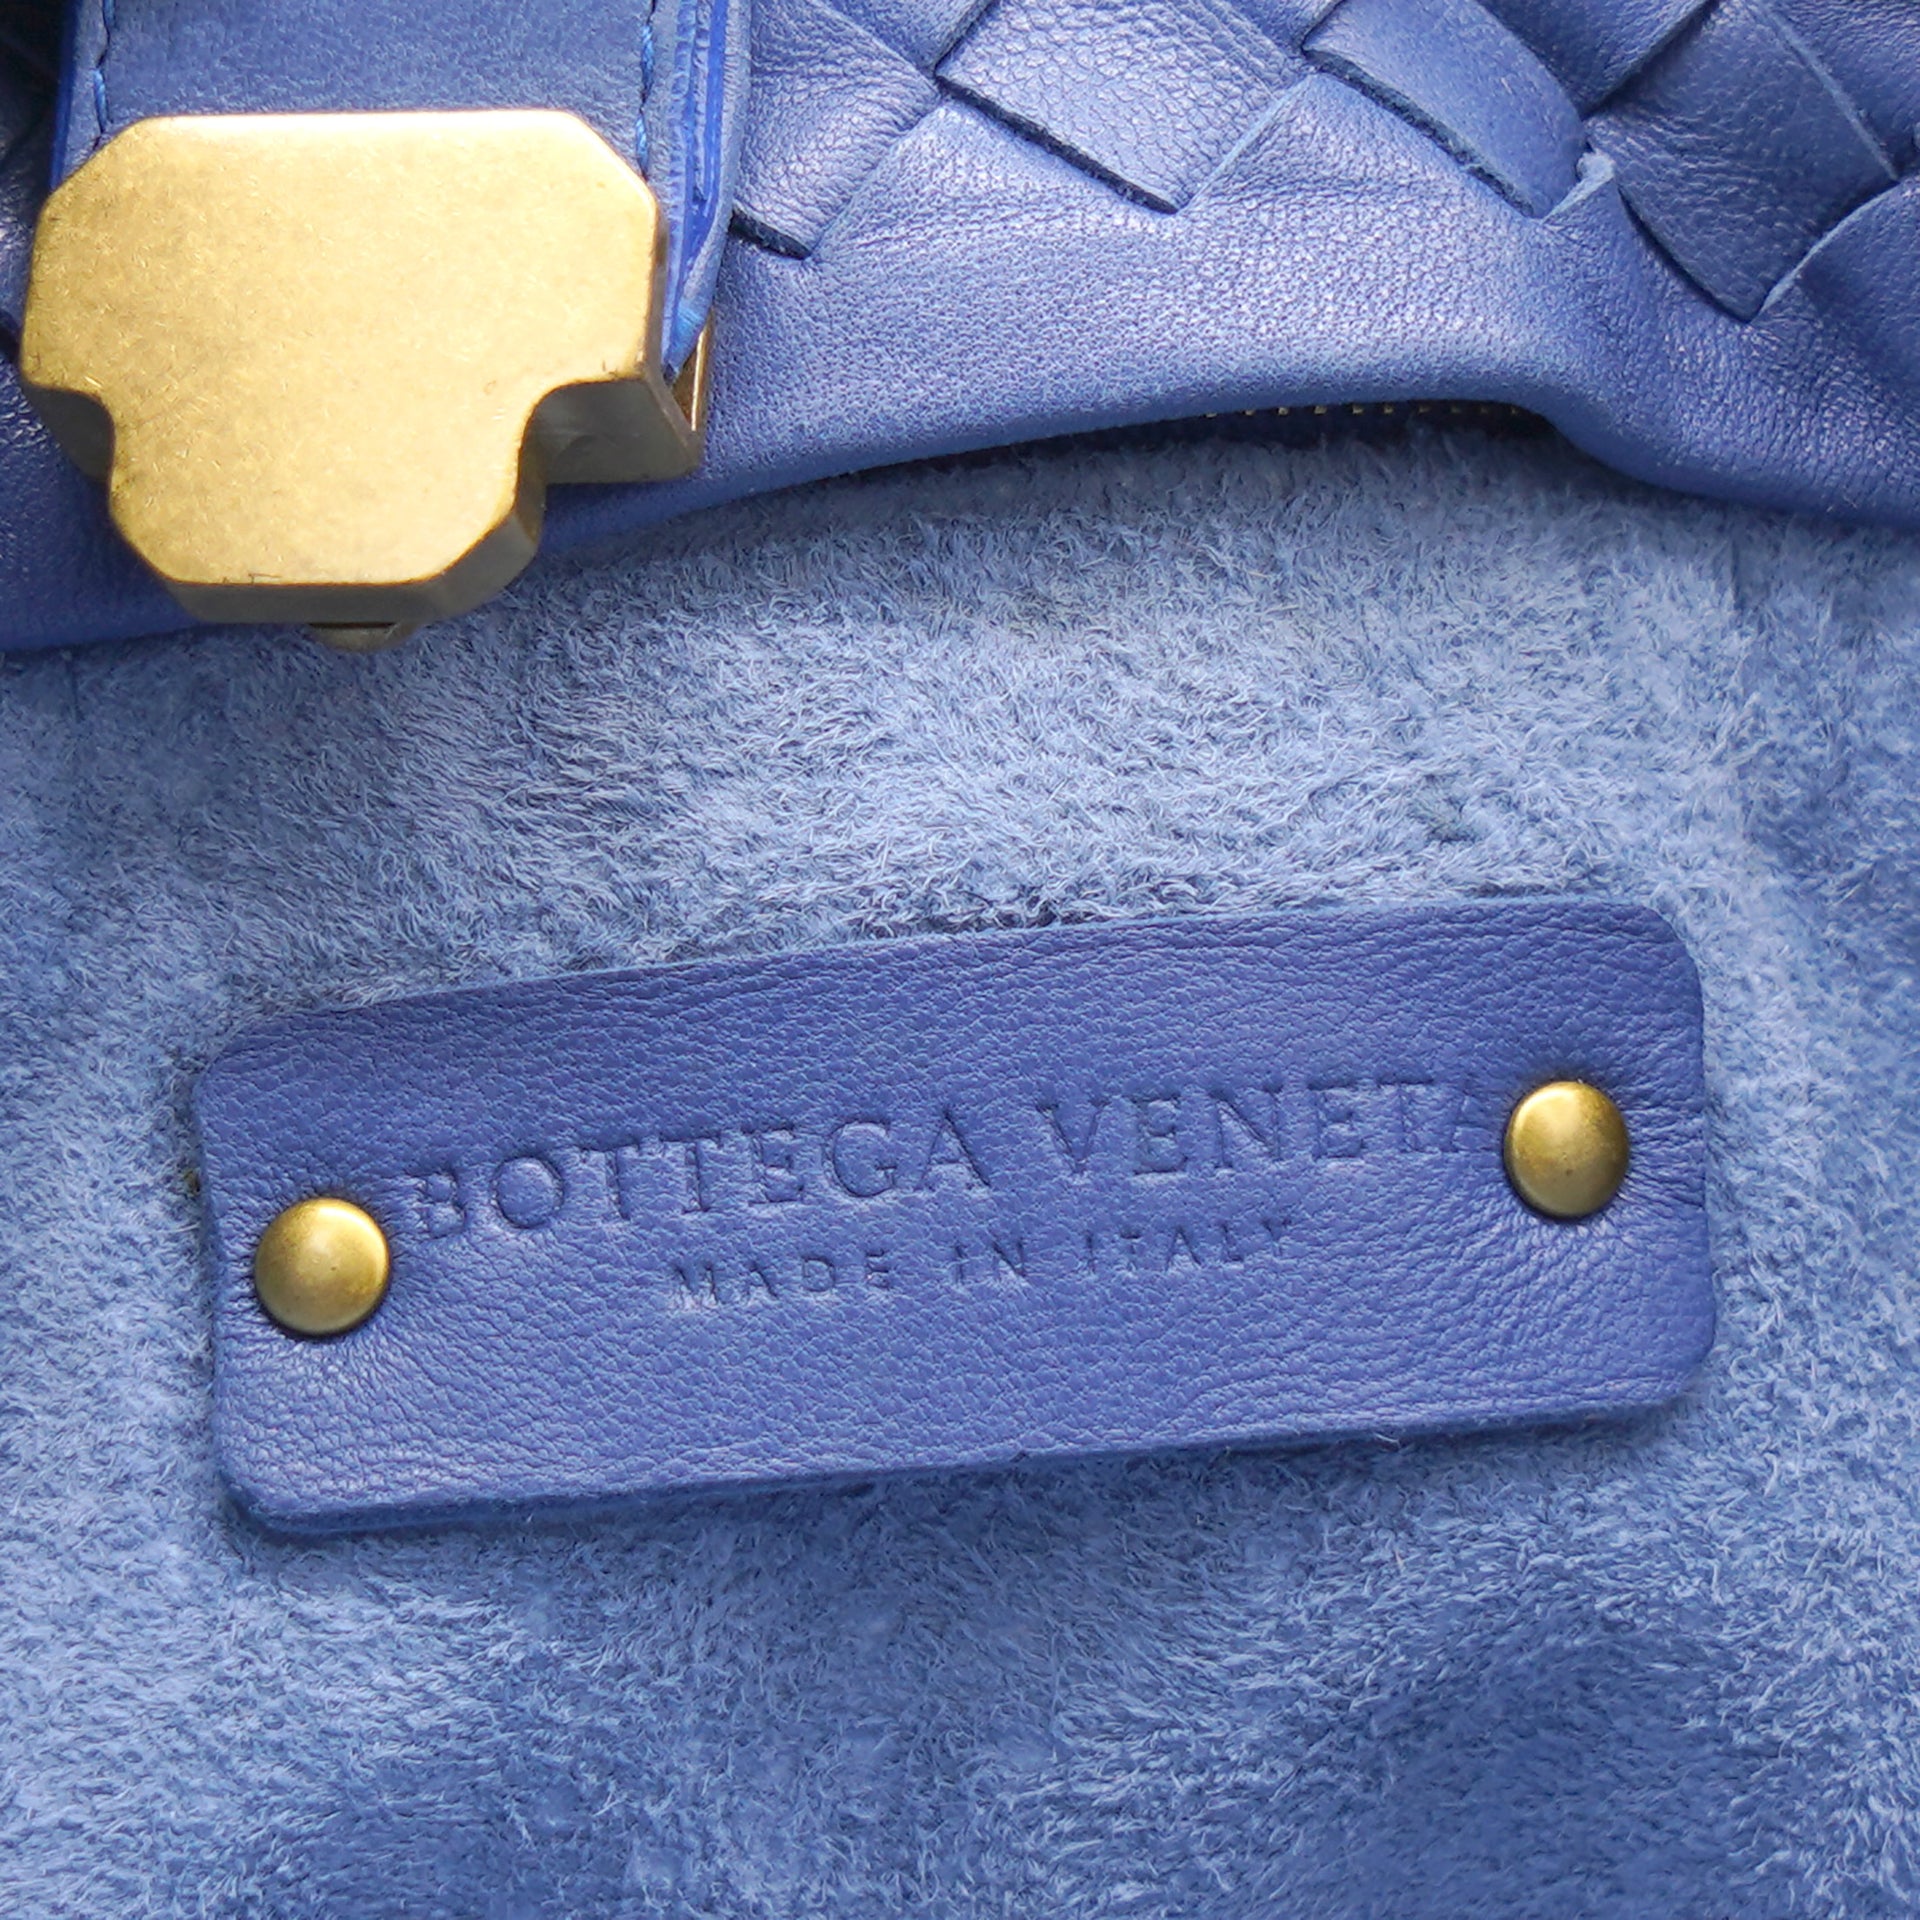 Blue Calf Leather Mini Capri Tote Bag